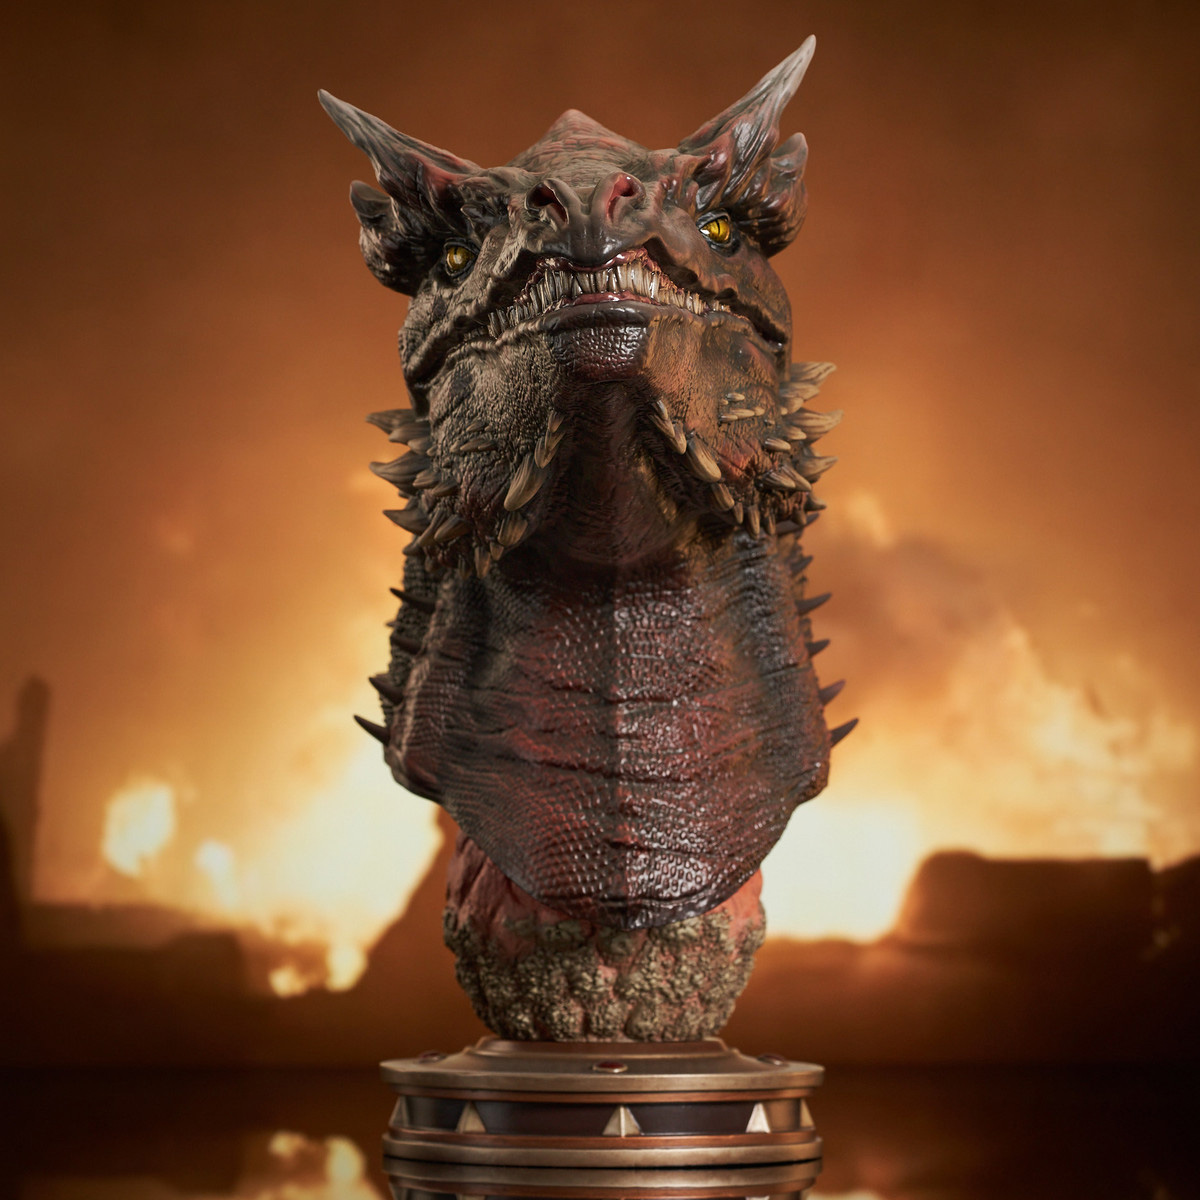 Busto Caraxes Legends in 3D, o Dragão de Daemon Targaryen em House of the Dragon